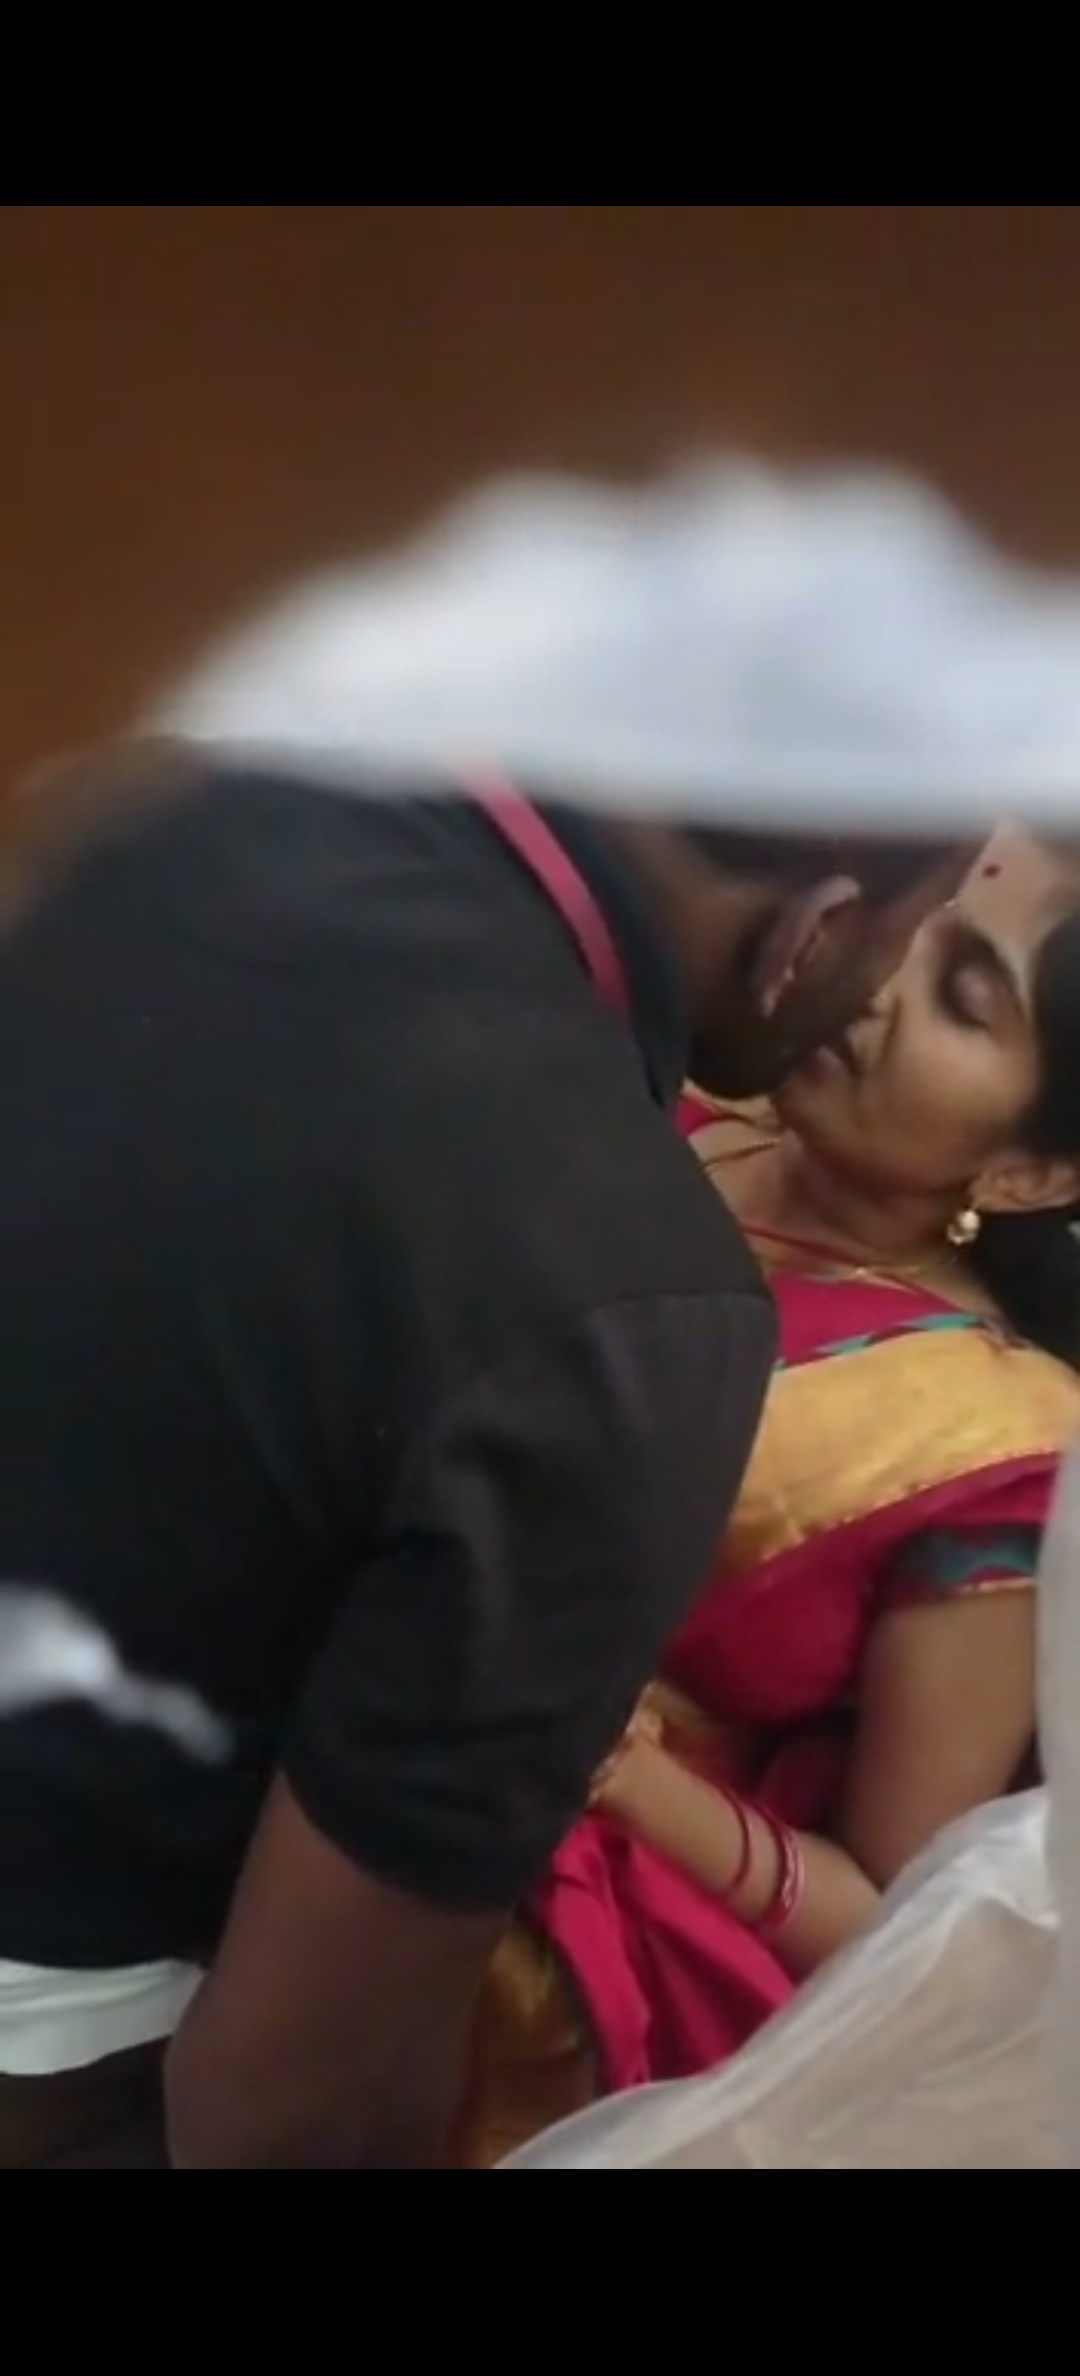 Tamil Lovers Store Room Hidden Full Video image